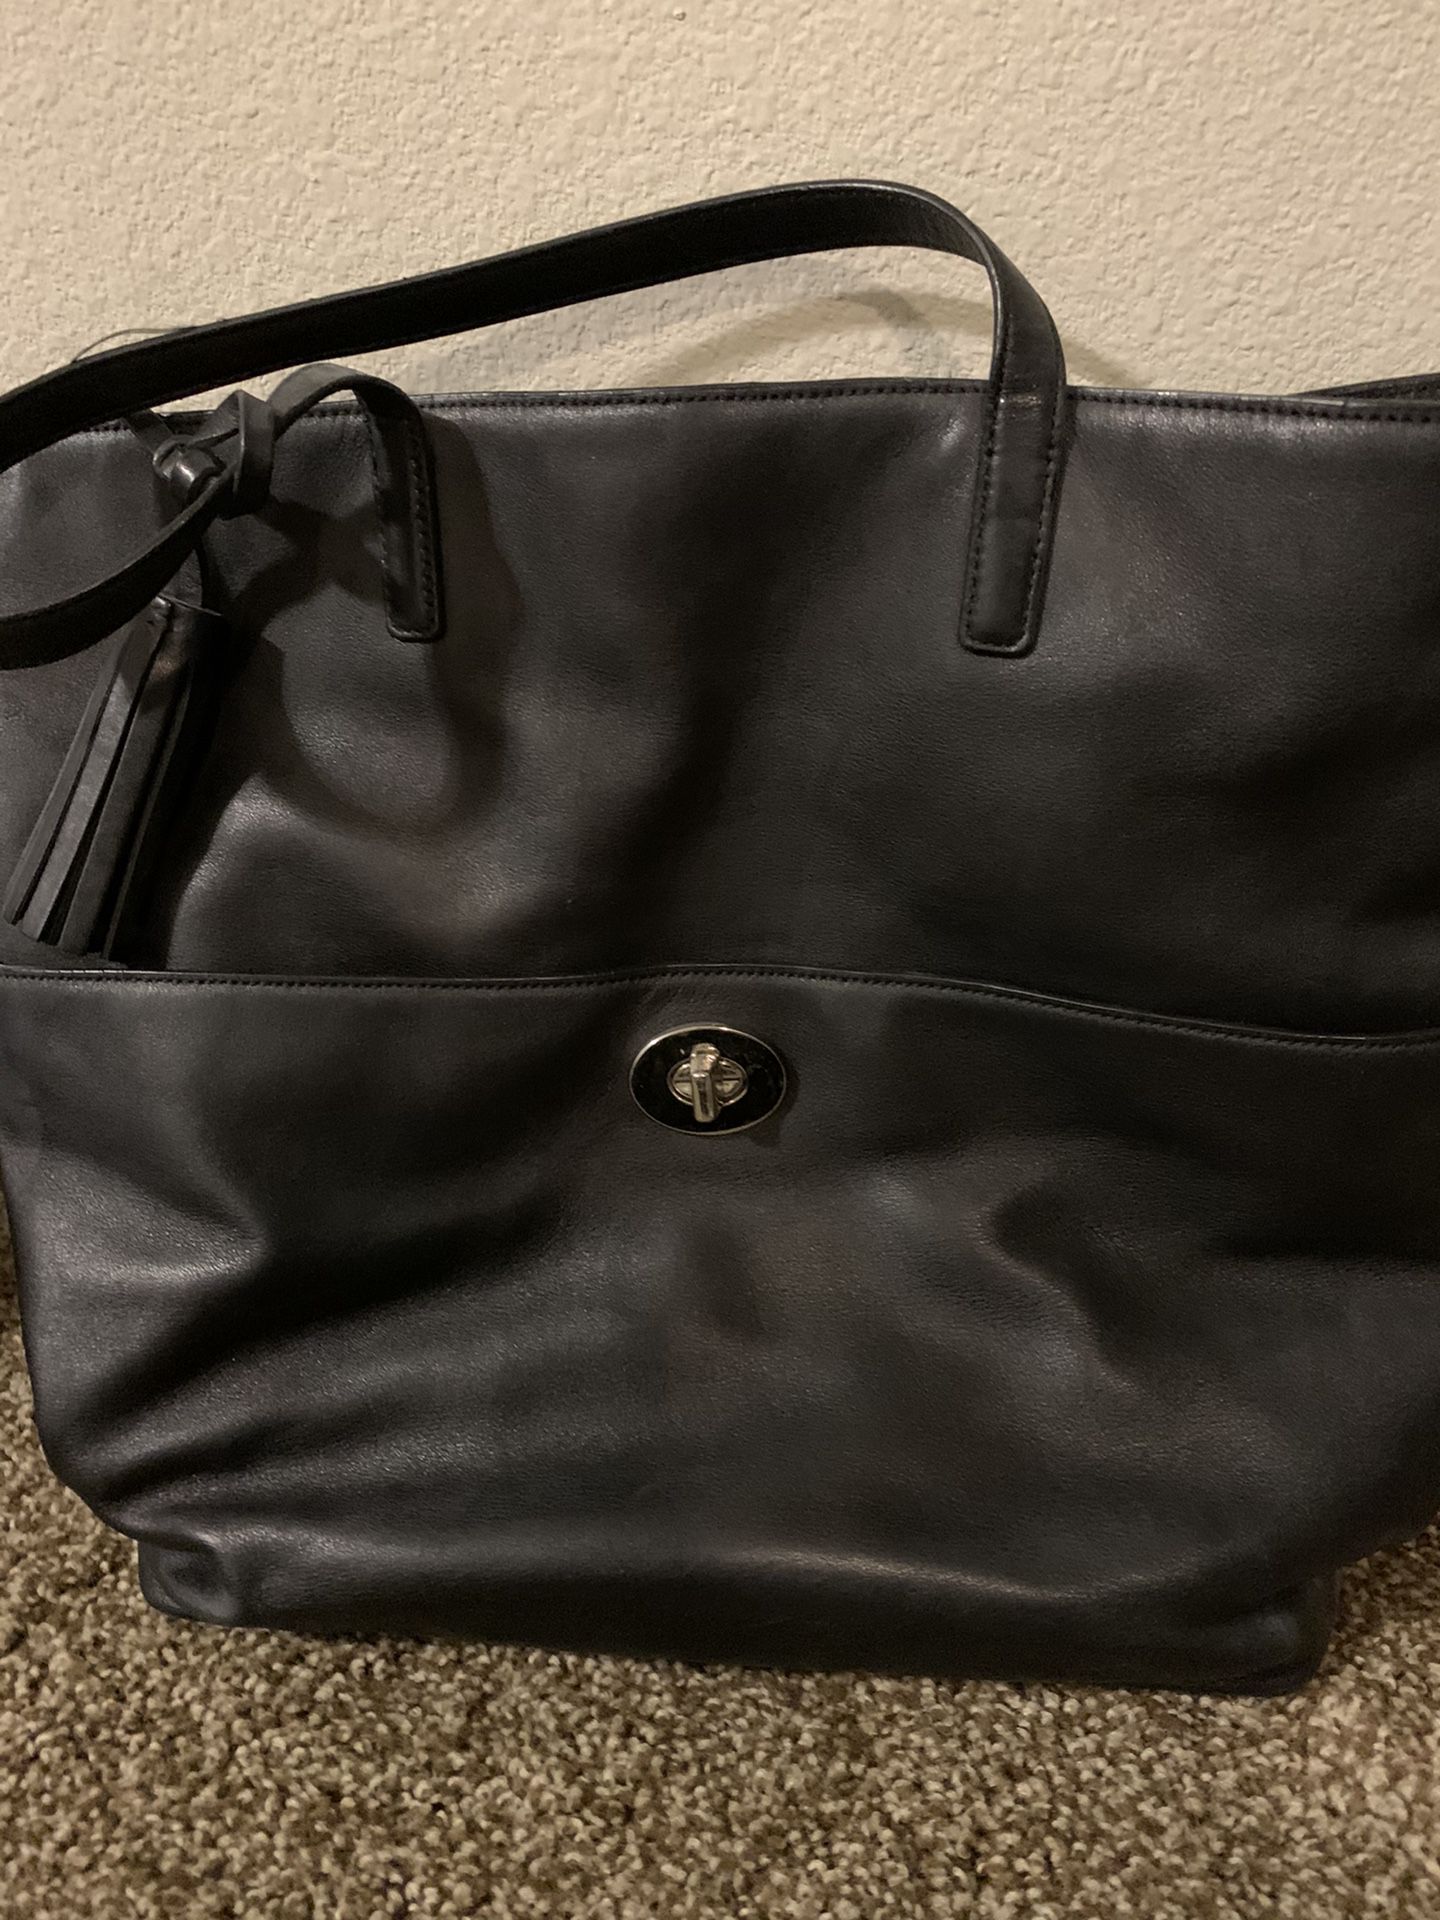 Black coach leather tote purse